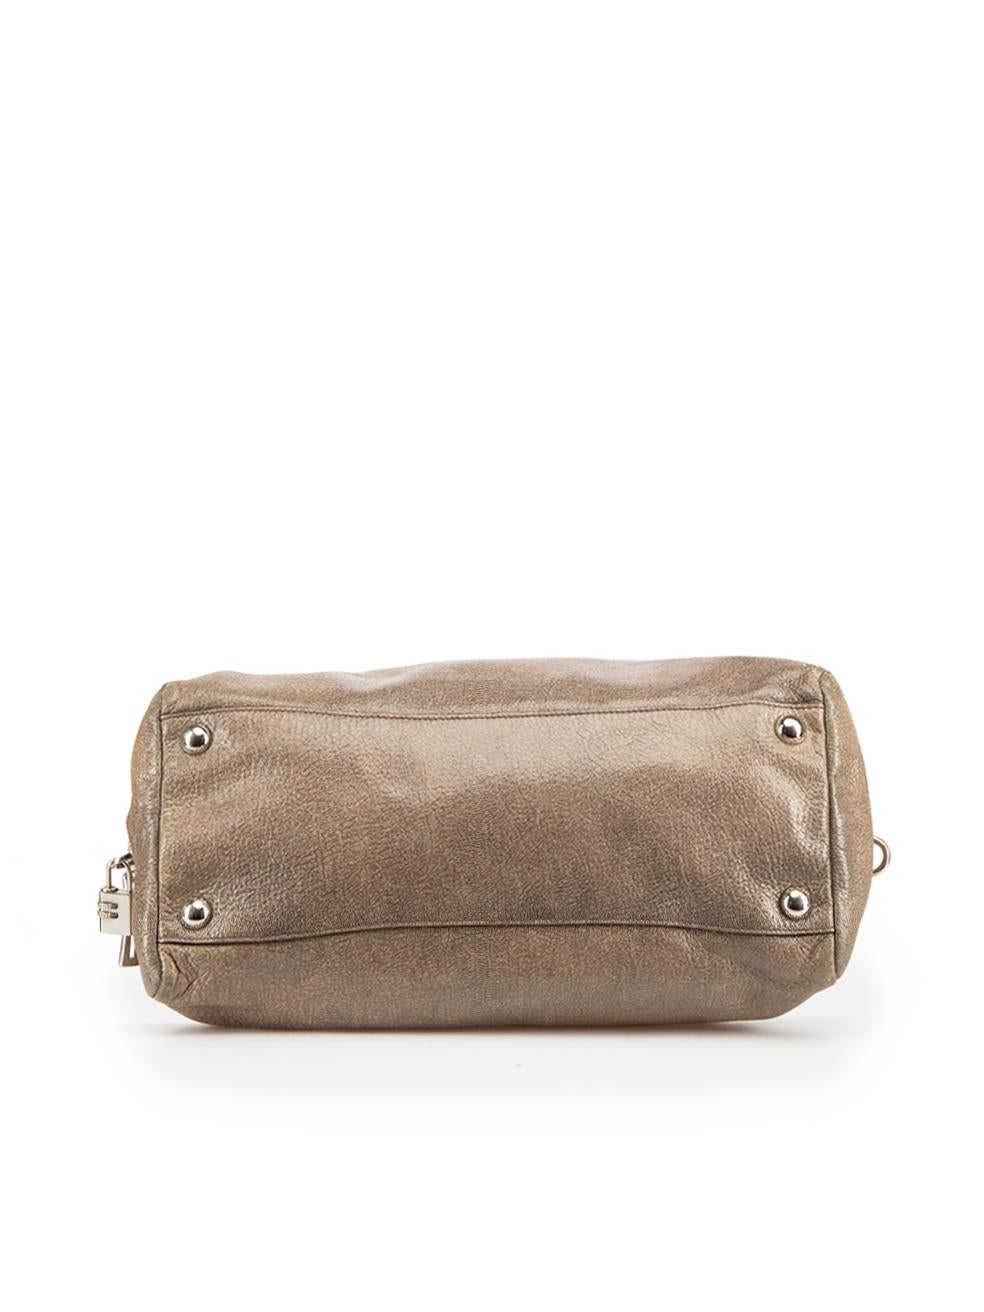 Prada Women's Taupe Deerskin Leather Cervo Lux Handbag For Sale 1